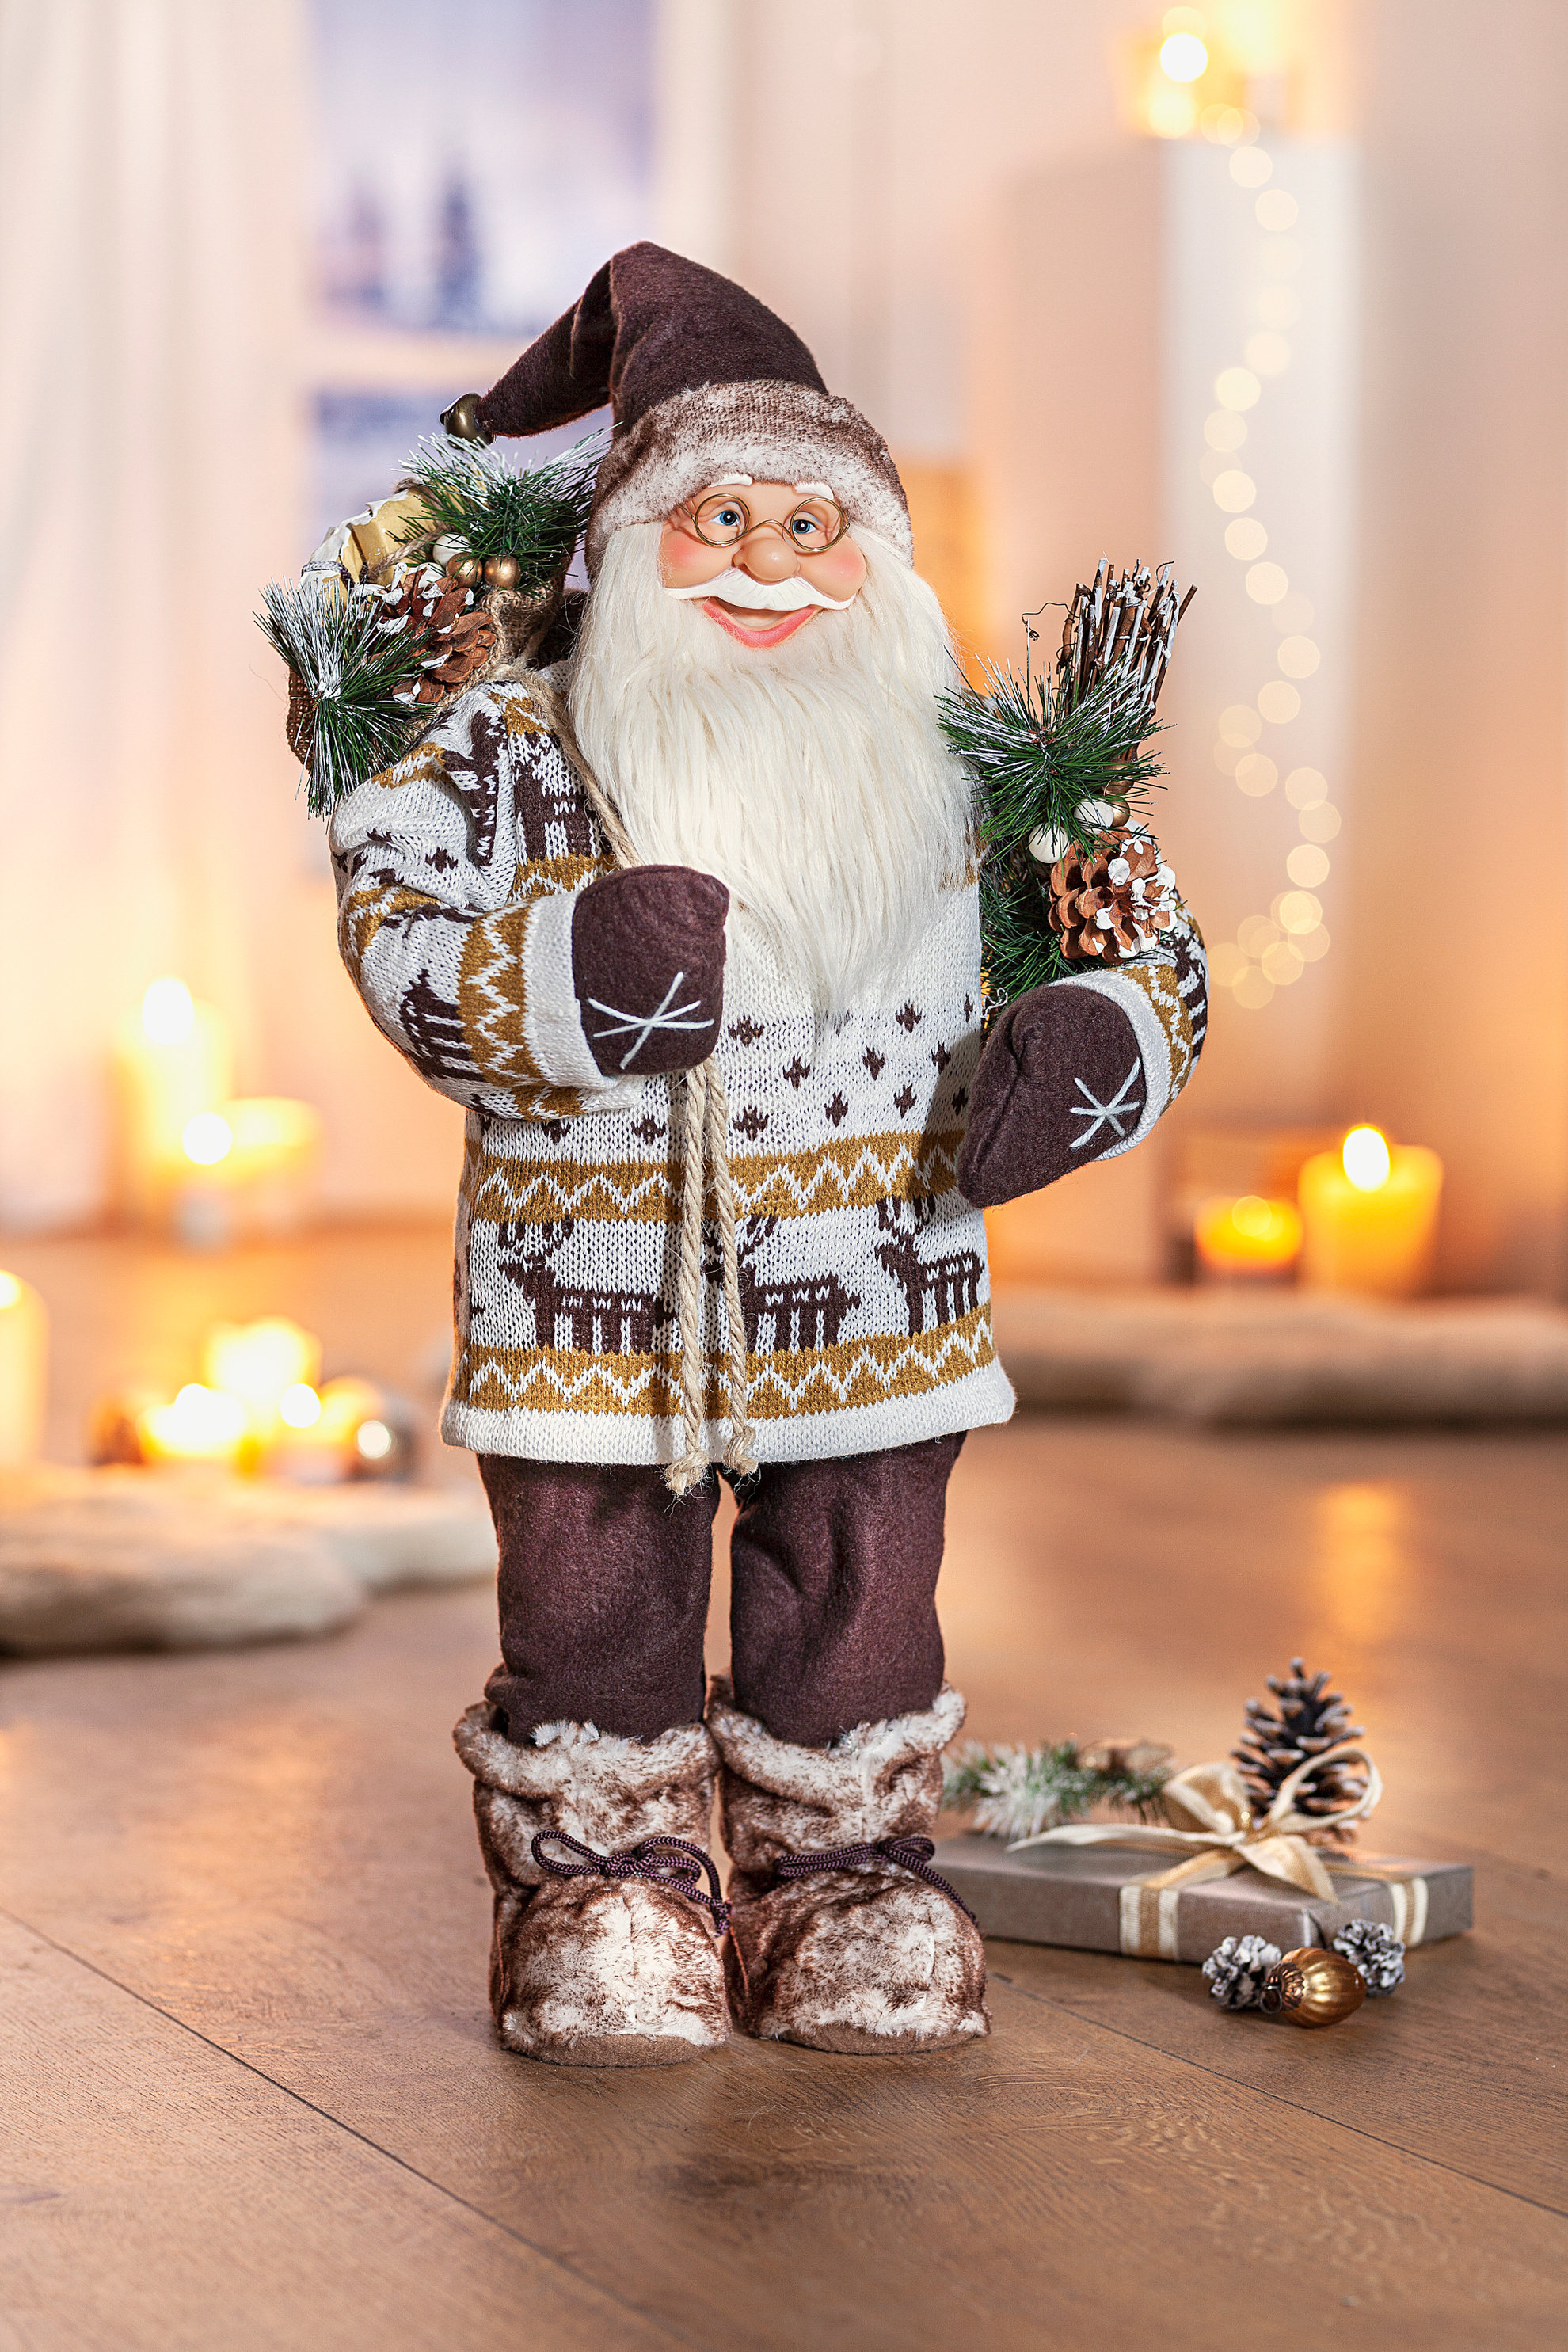 Dekofigur Santa Claus, 60 cm jetzt bei Weltbild.de bestellen